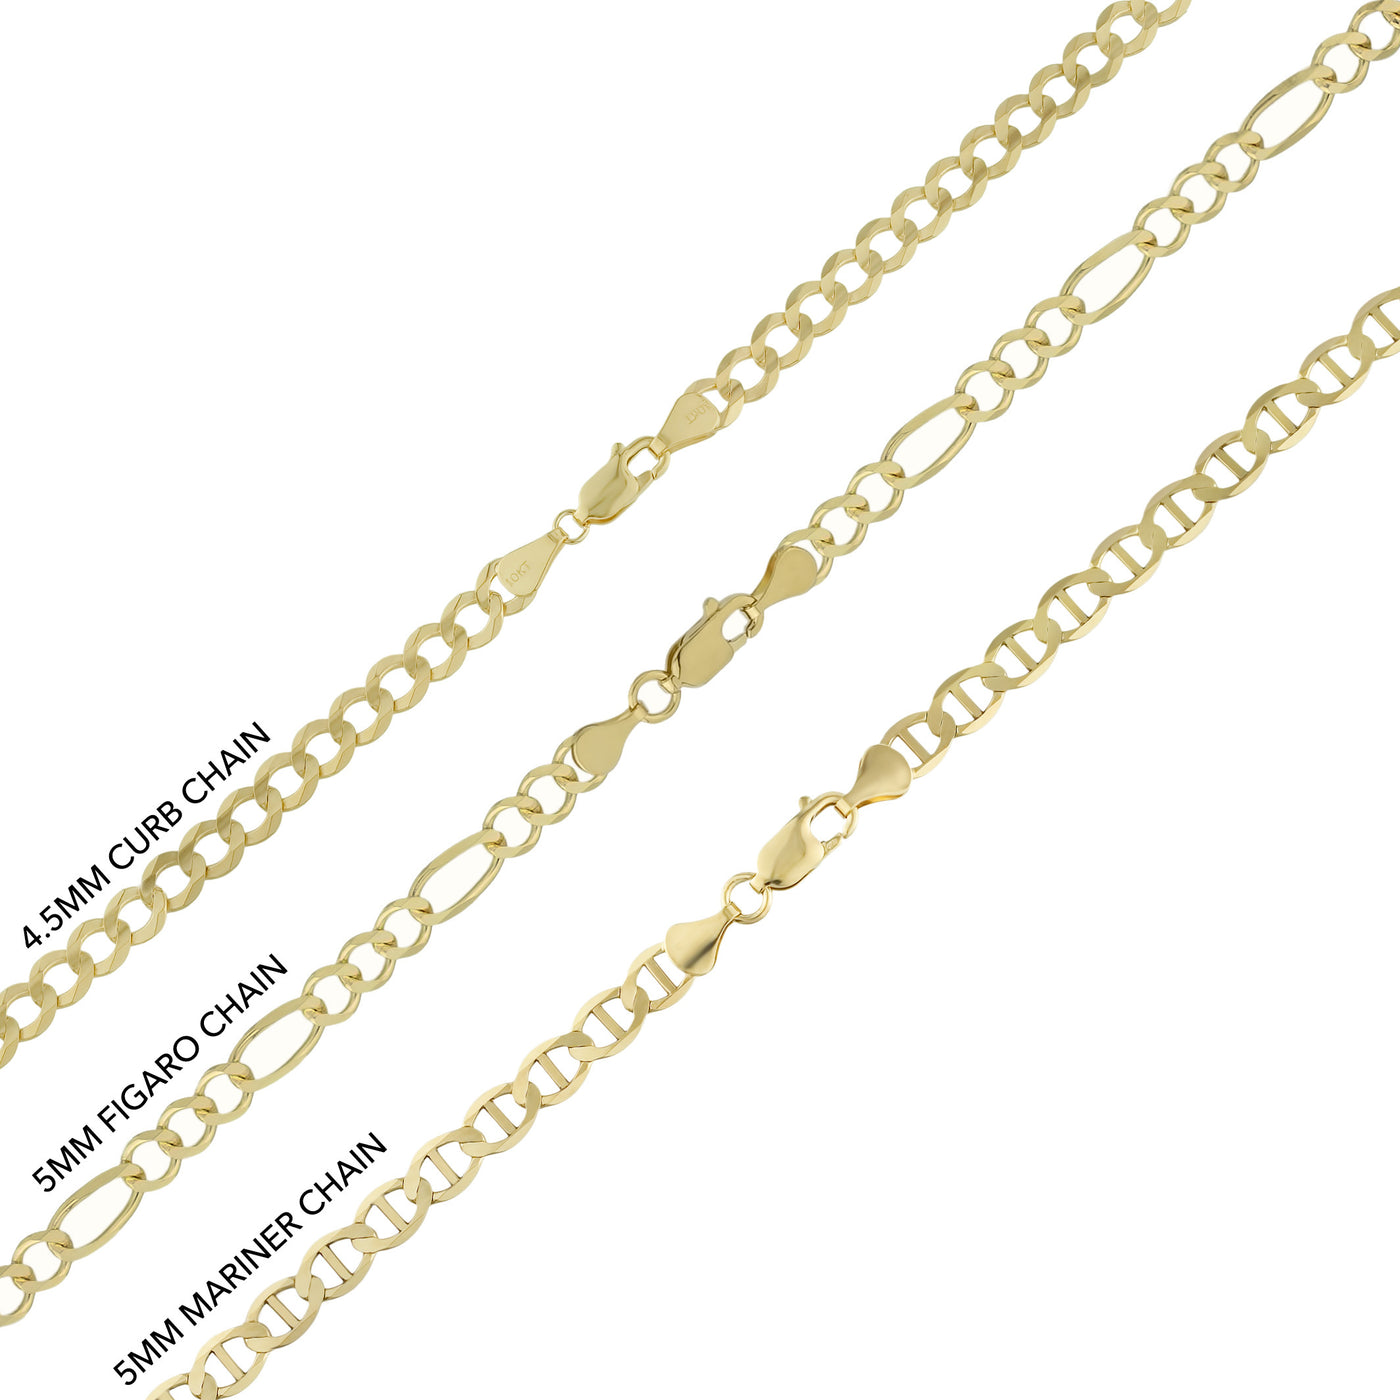 1 3/4" T-Rex Dinosaur Pendant & Chain Necklace Set 10K Yellow Gold